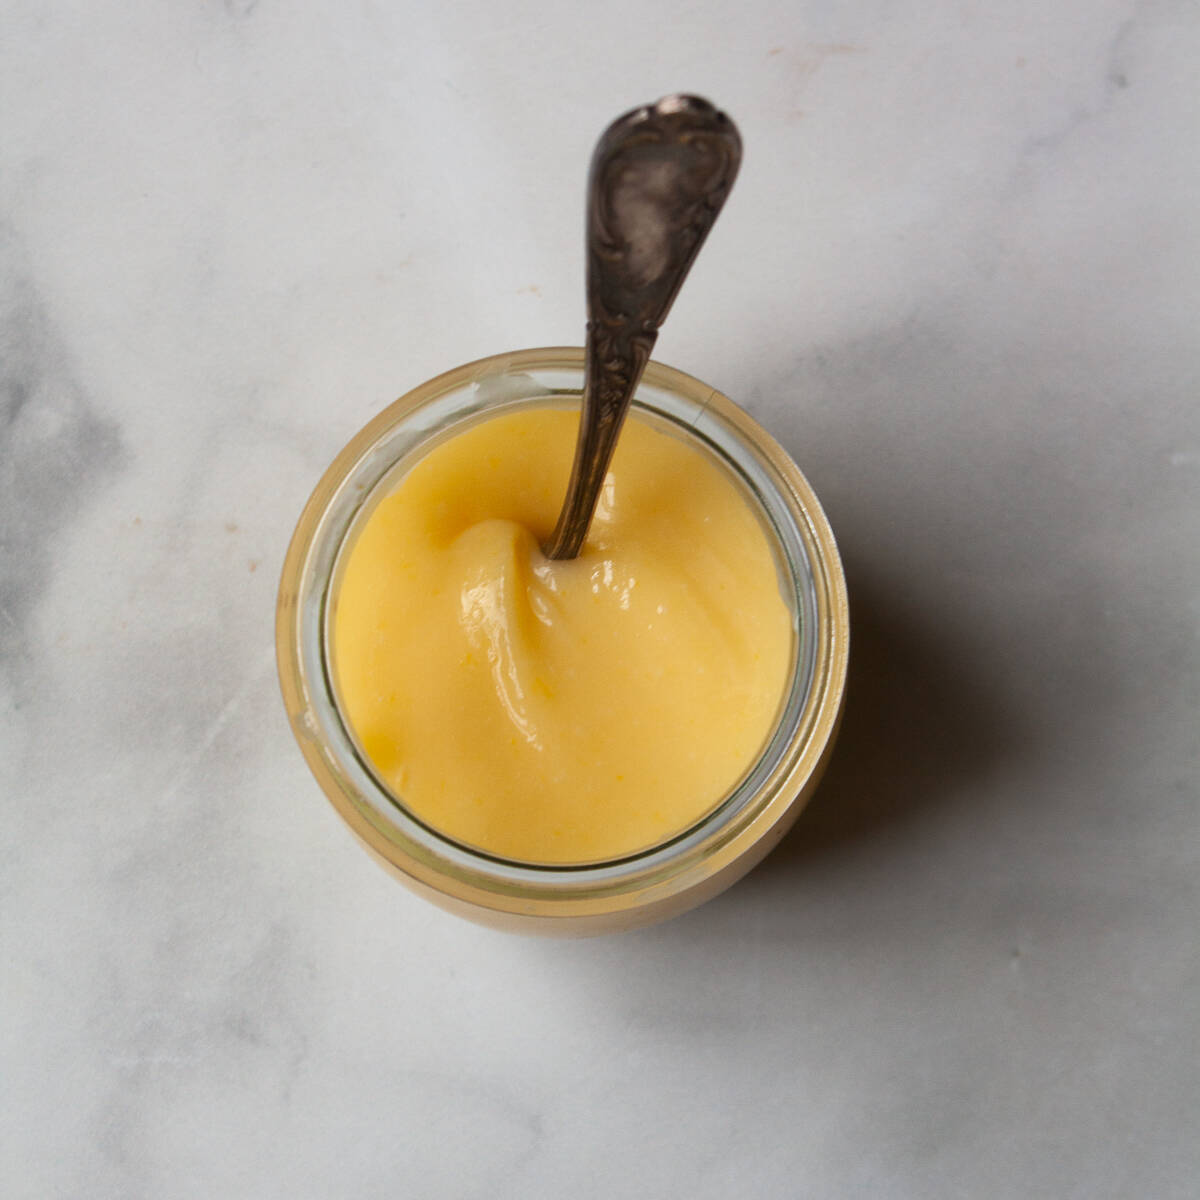 A spoon rests in a jar of lemon curd.